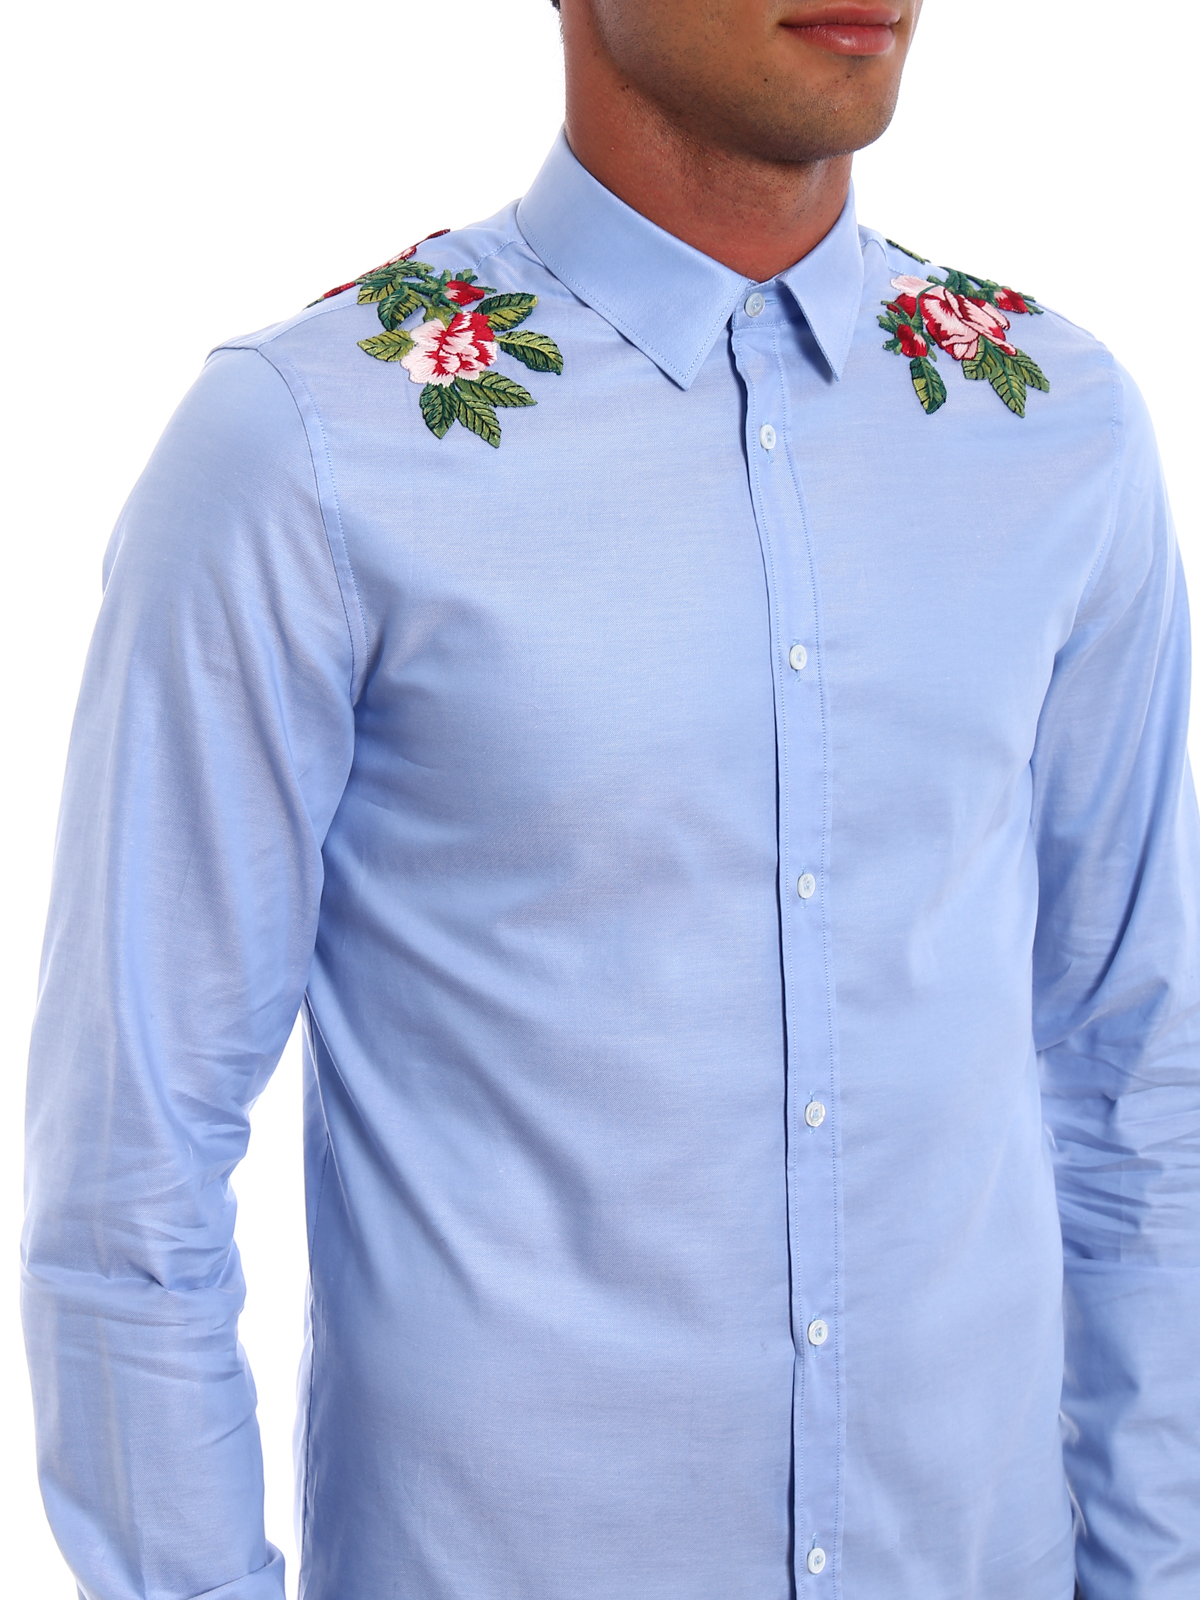 Shirts Gucci - Duke embroidered cotton shirt - 478810Z338E4910 